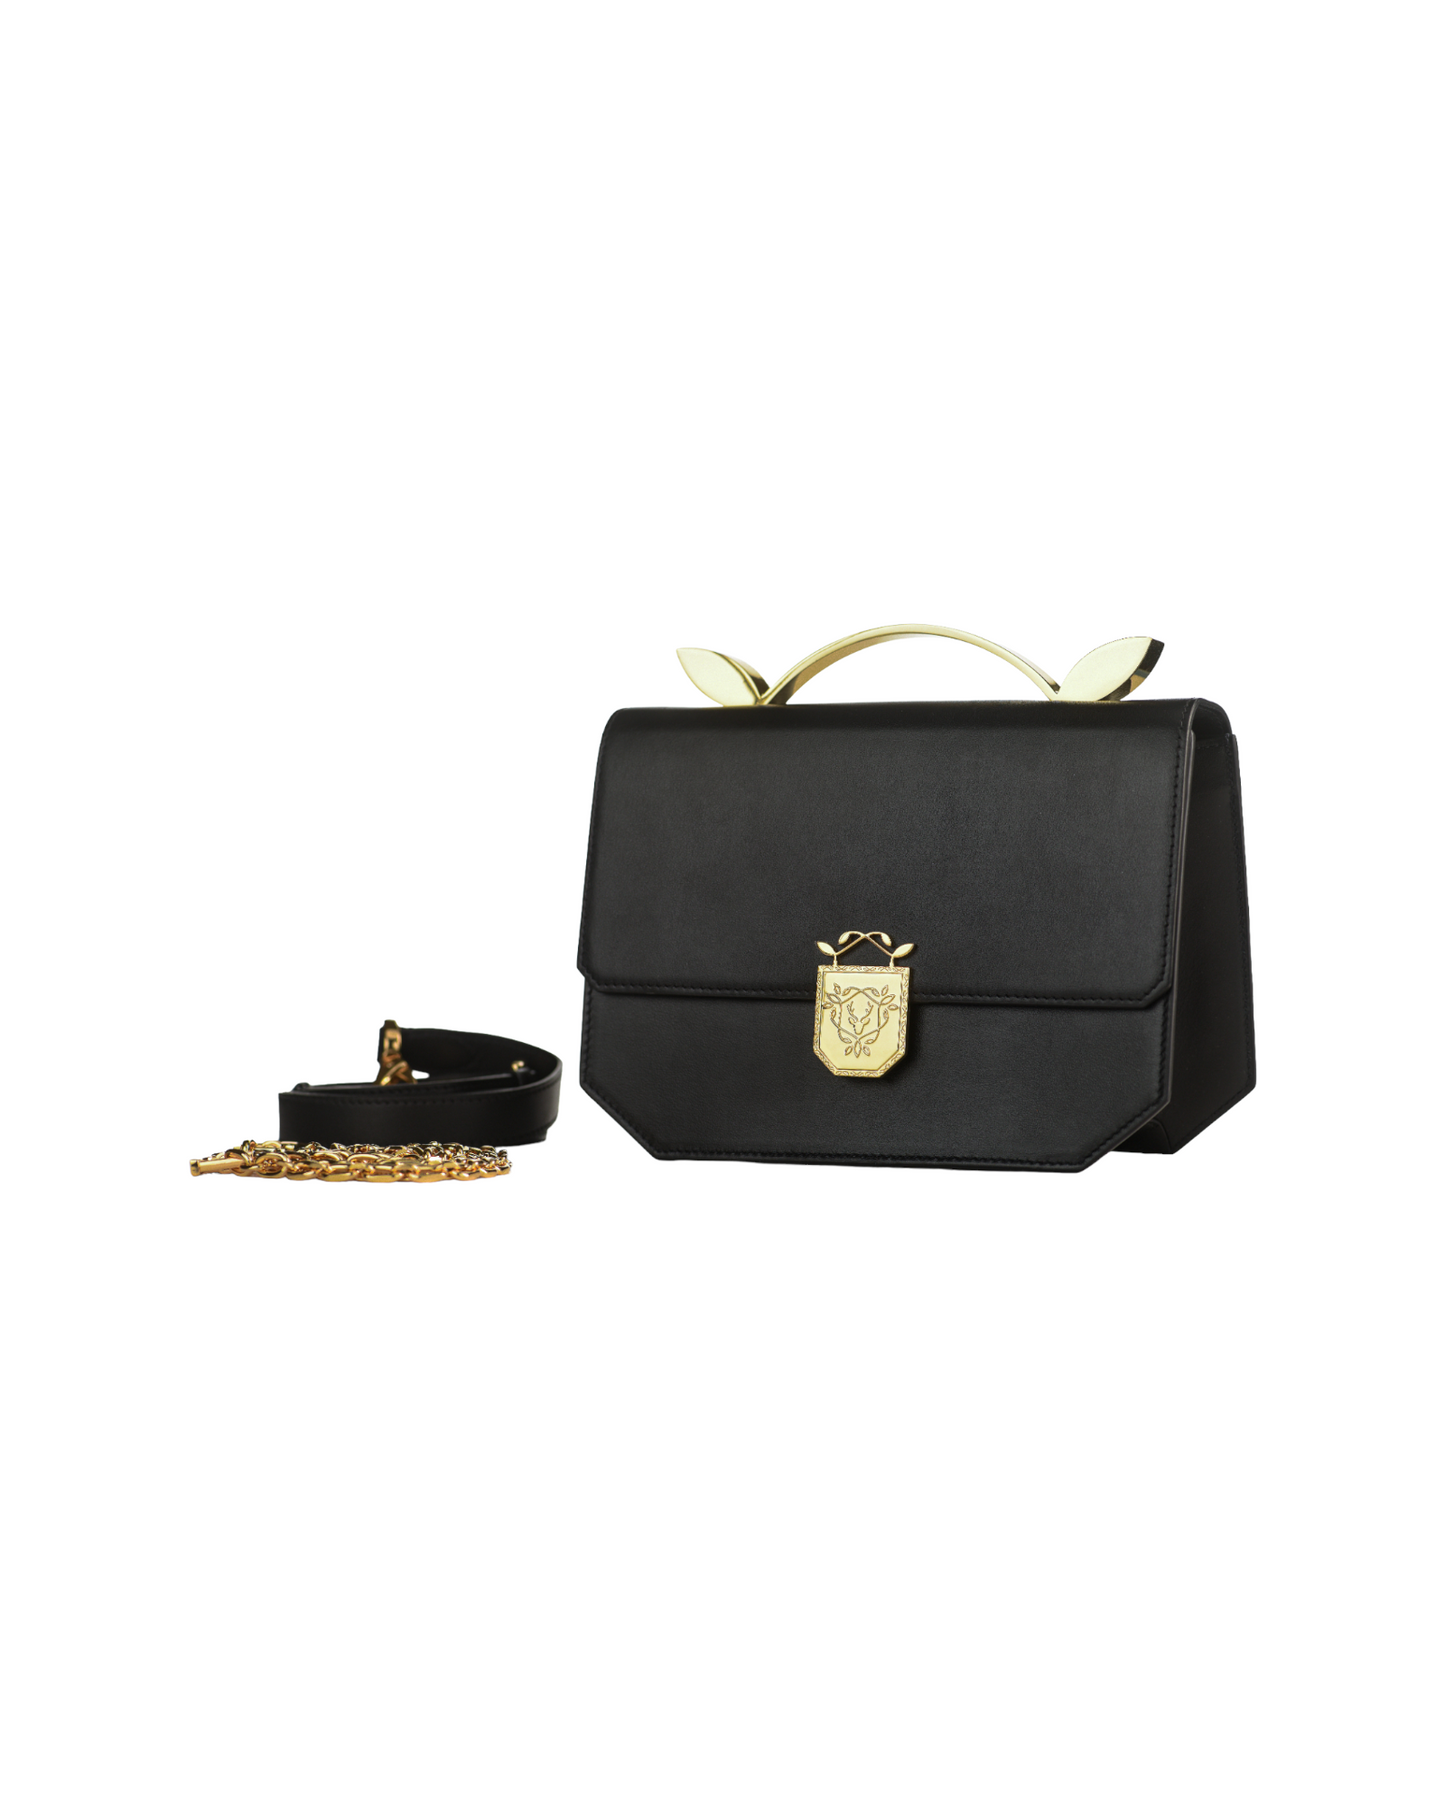 Rania Manasra Black Opulent Shoulder Bag